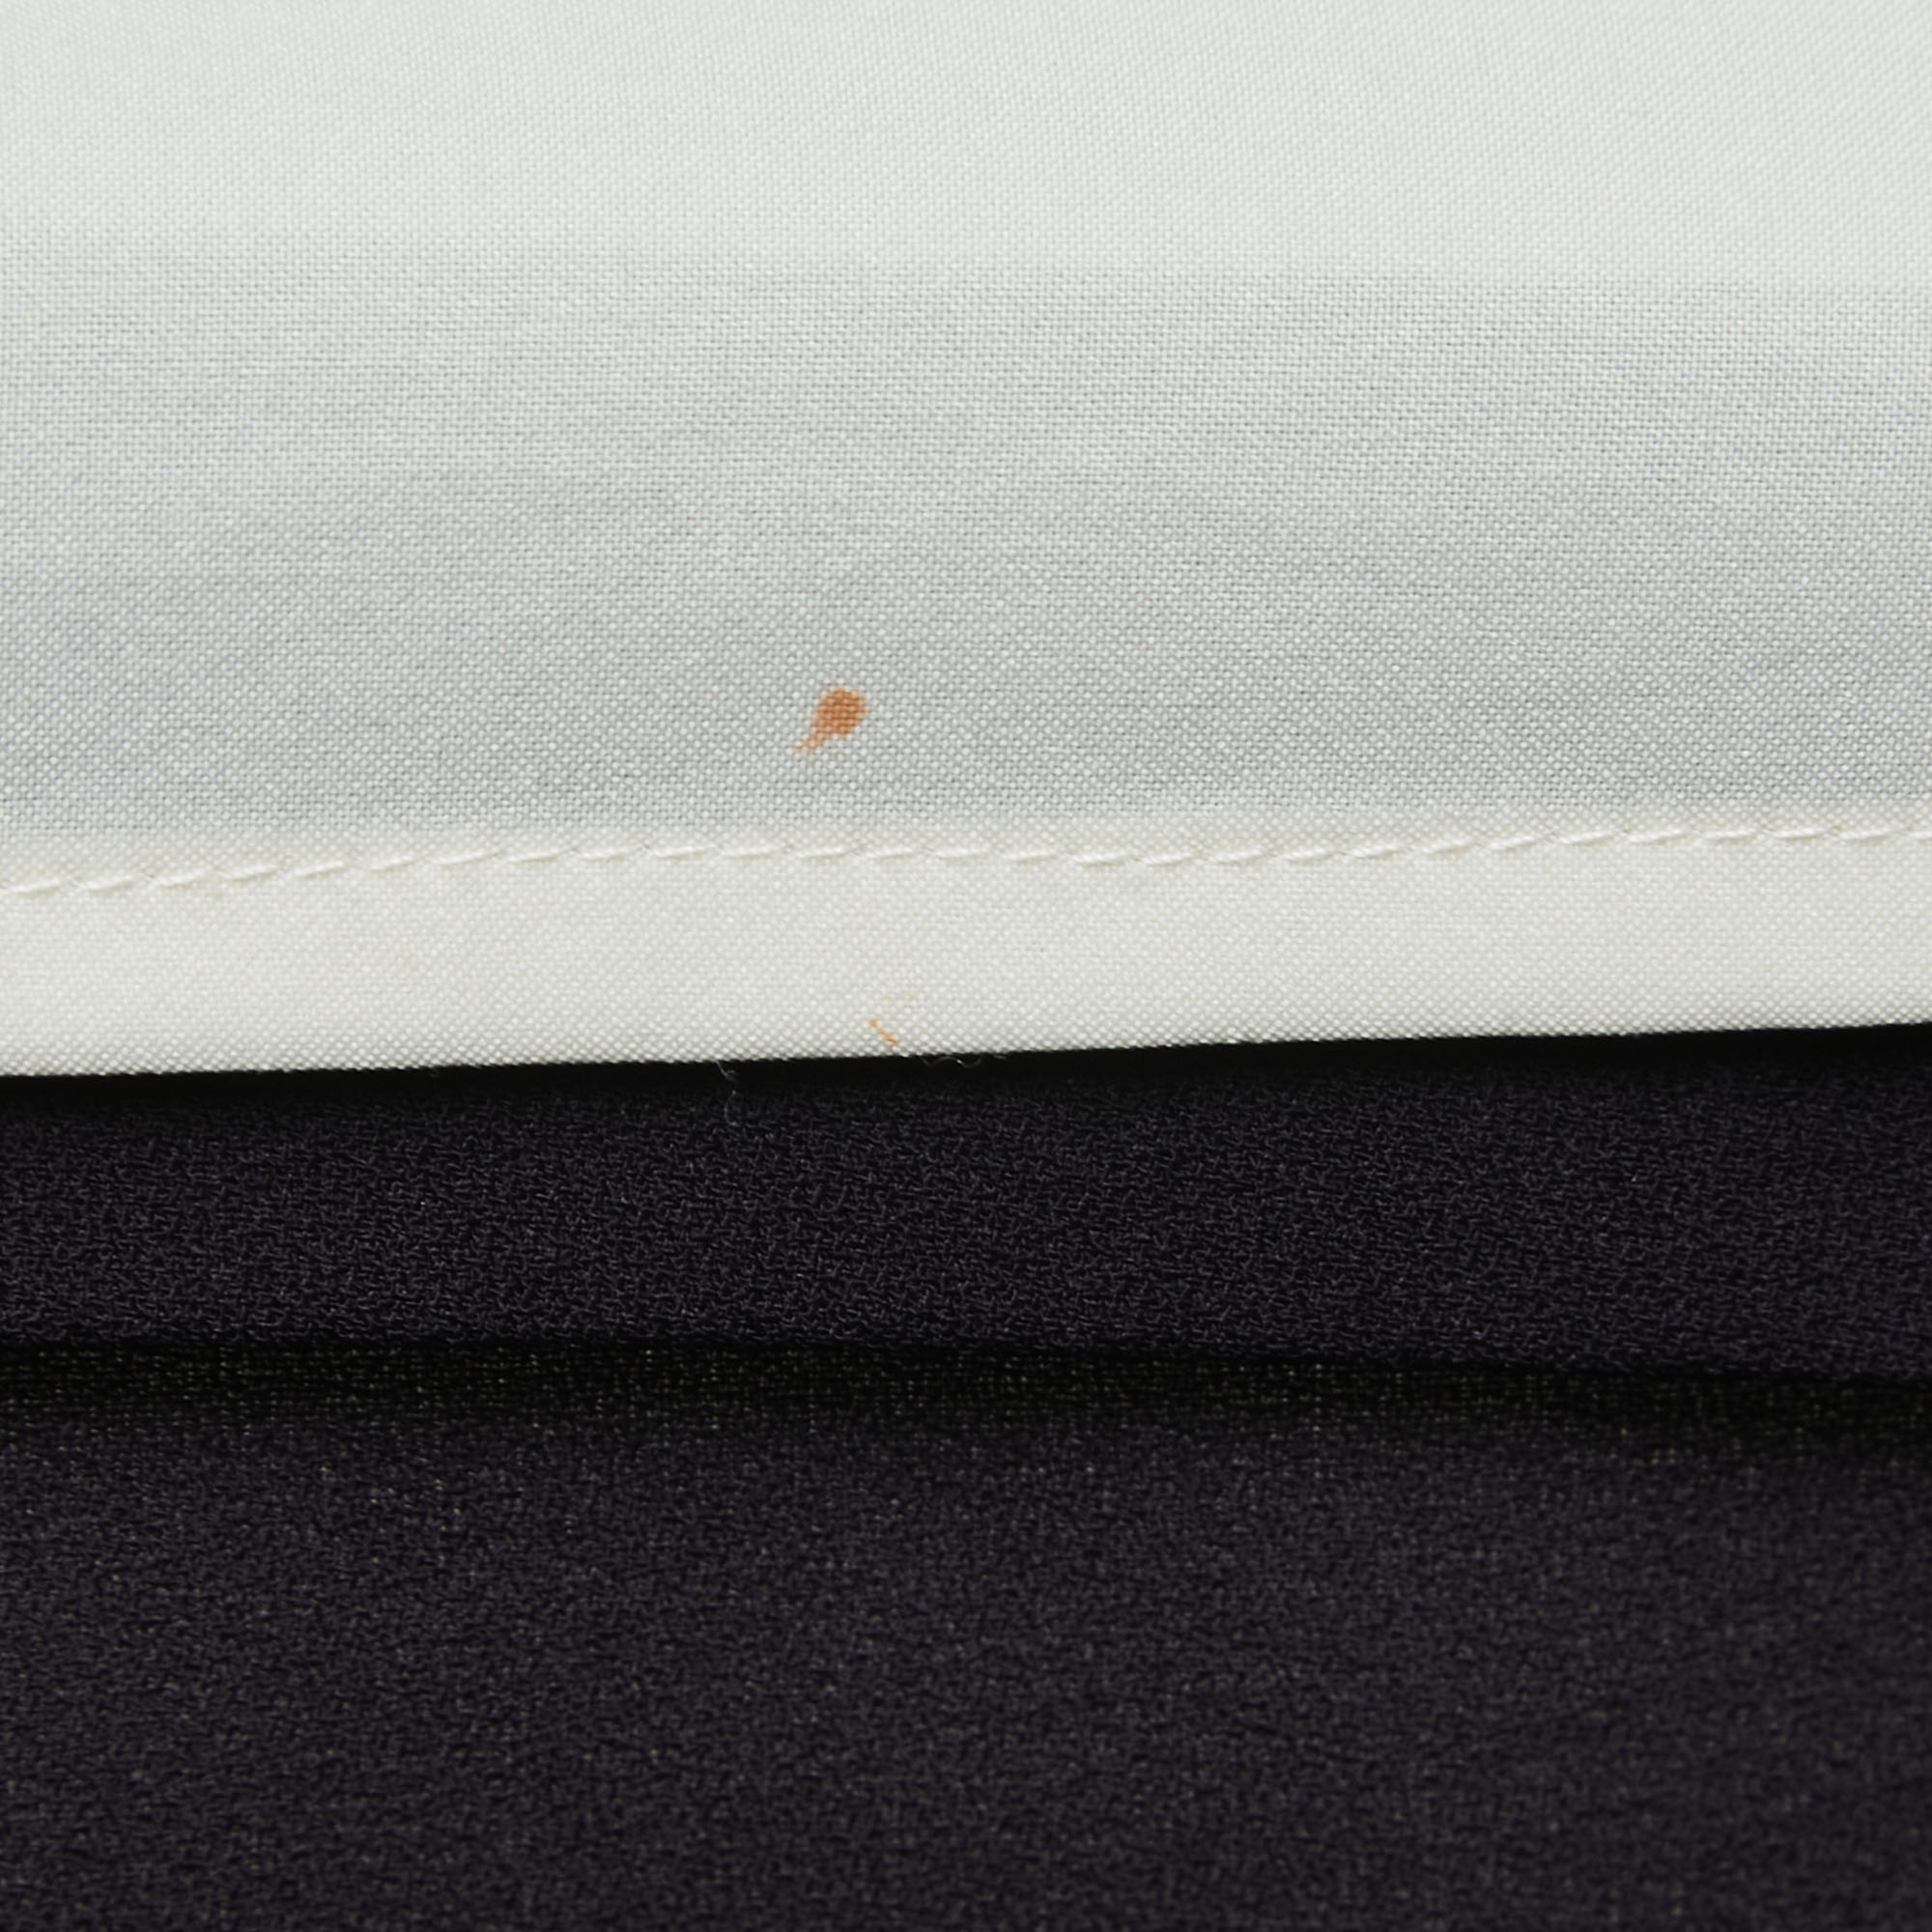 Boutique Moschino Cream/Black Logo Print Crepe Sleeveless Mini Dress S